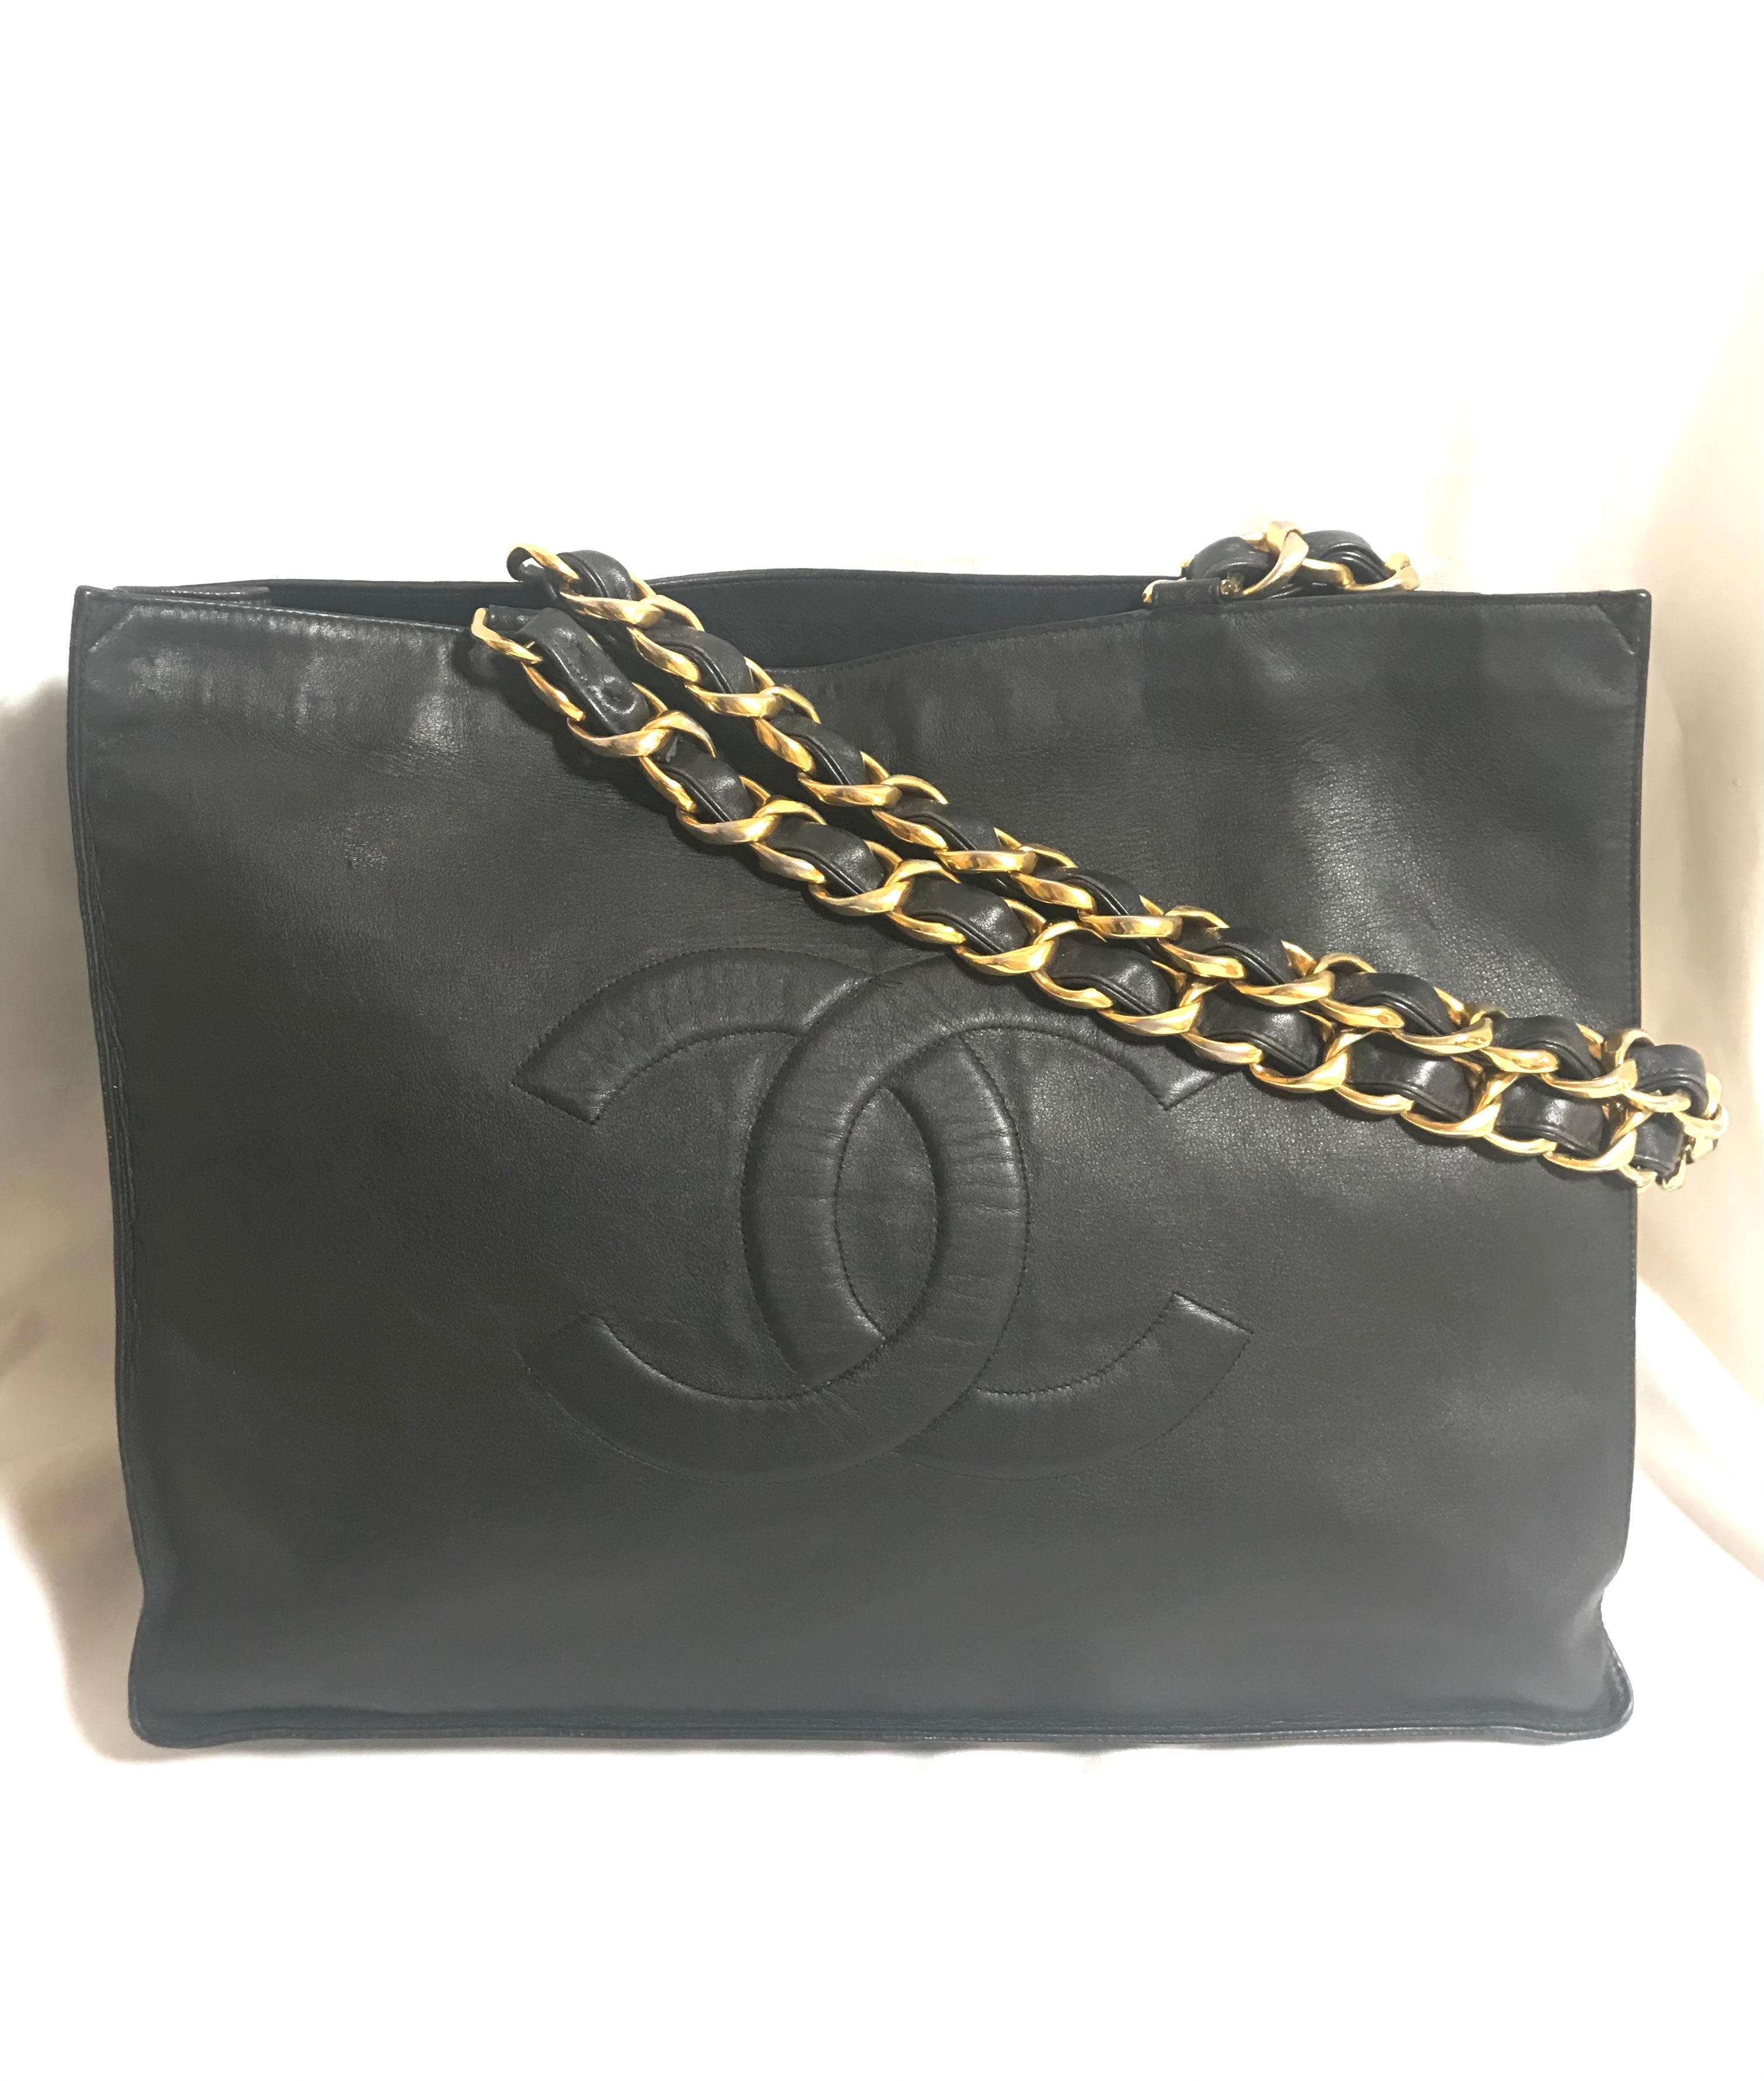 Gucci black velvet purses - Gem